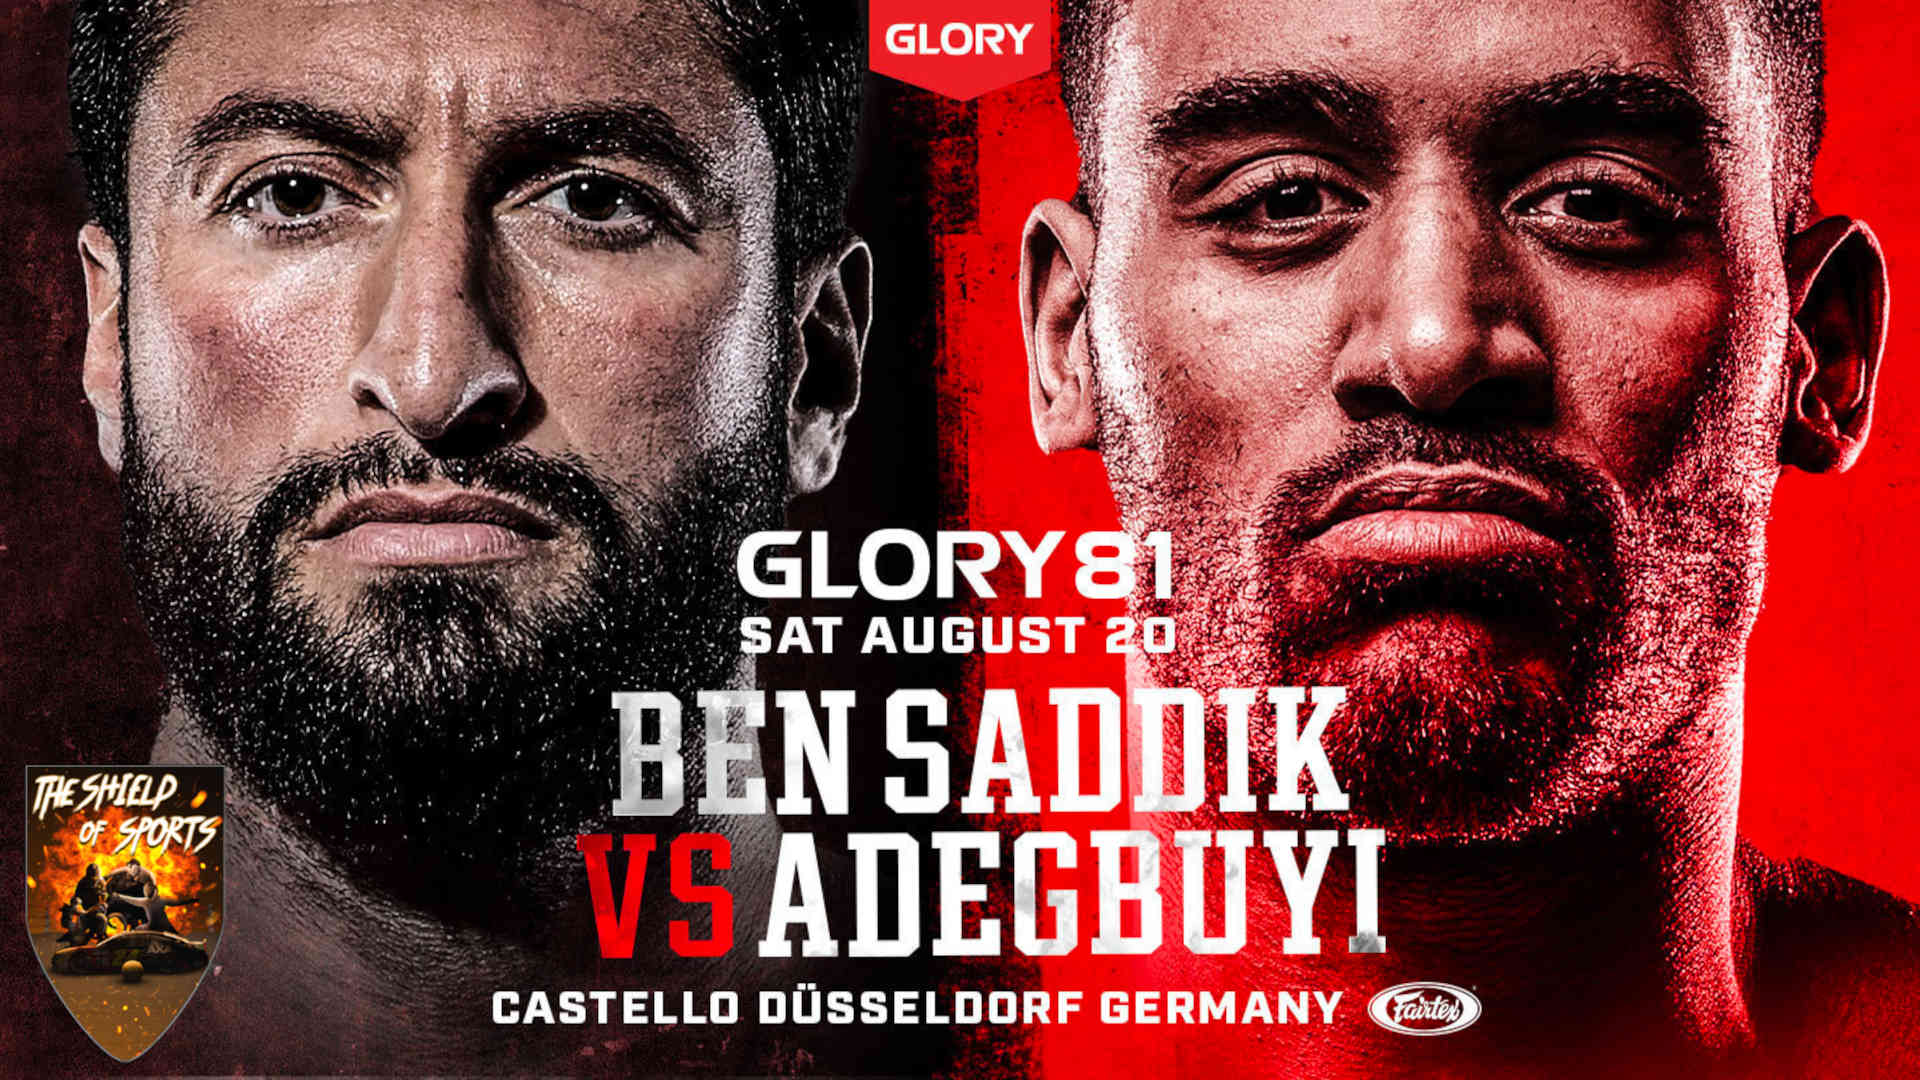 GLORY 81: Ben Saddik vs Adegbuyi 2 card e streaming